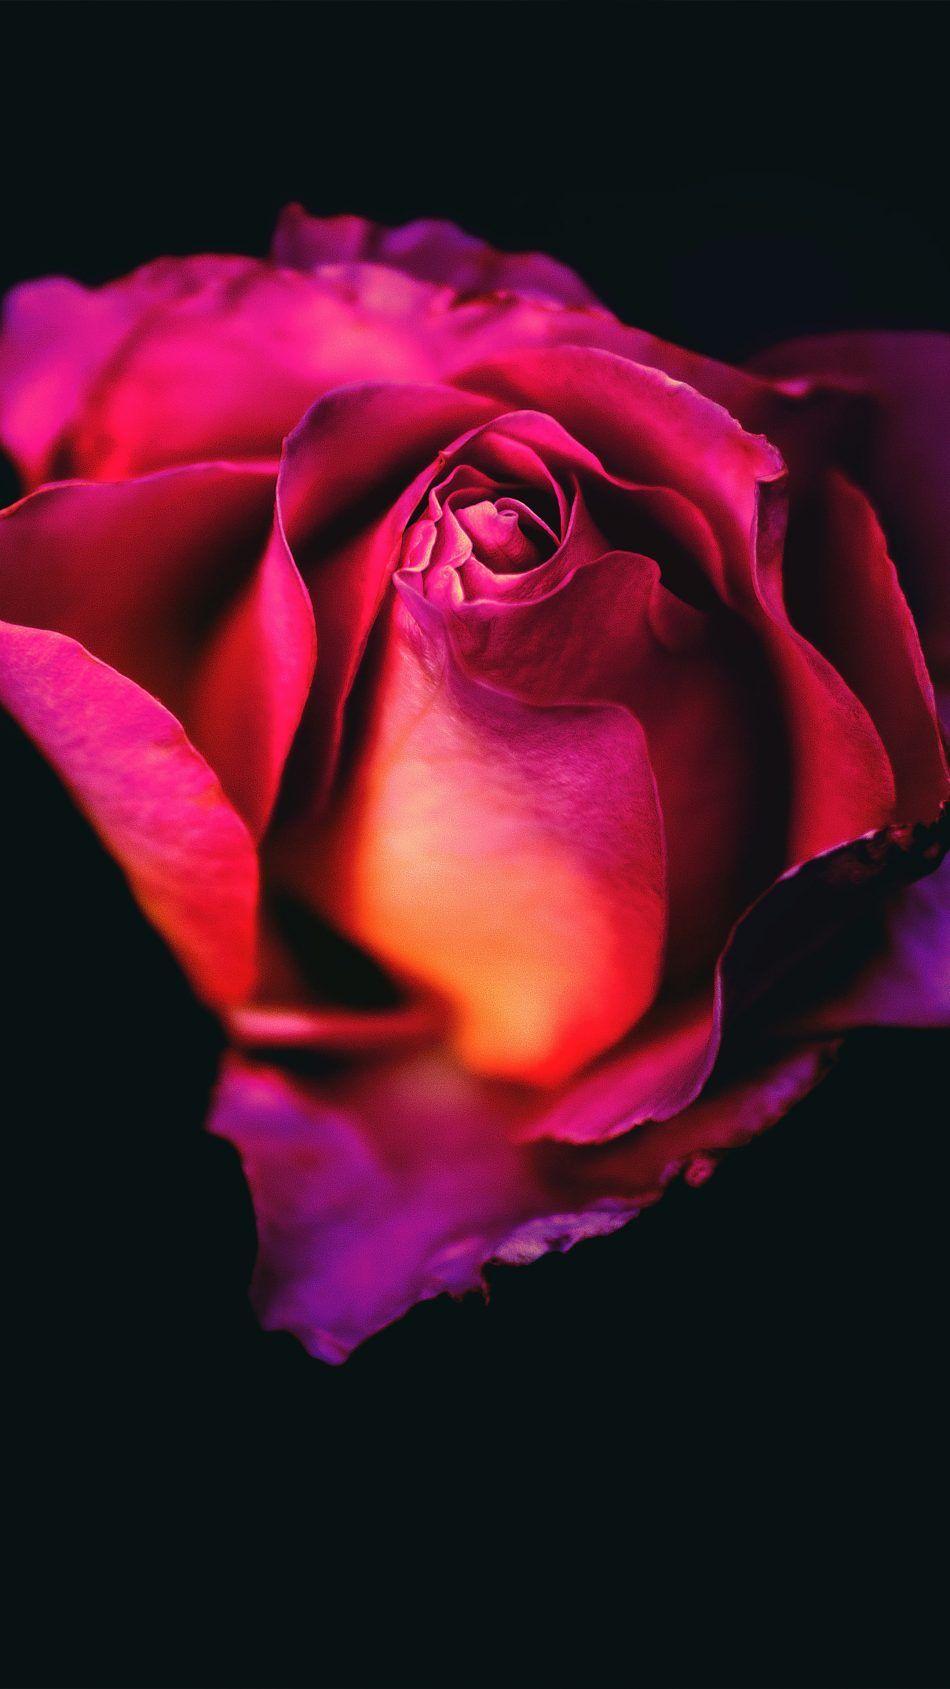 Rose Flower Dark Background 4K Ultra HD Mobile Wallpaper. Rose wallpaper, Wallpaper iphone roses, Flower background